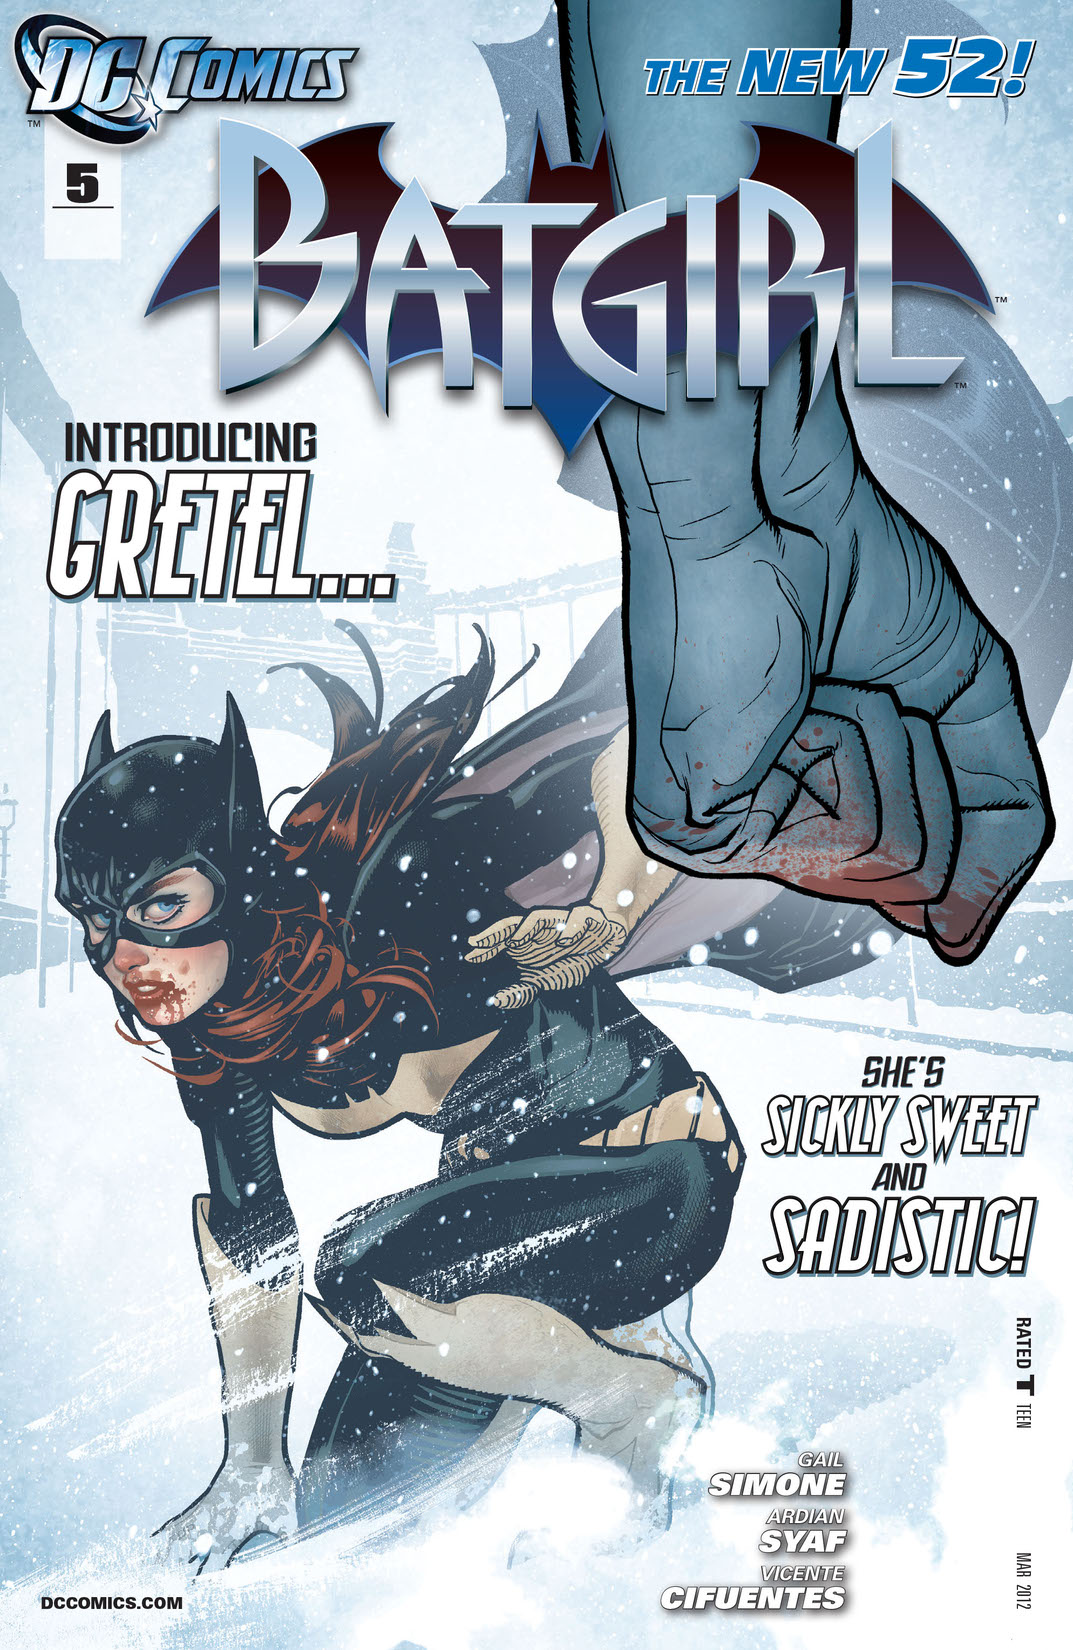 Batgirl (2011-) #5 preview images